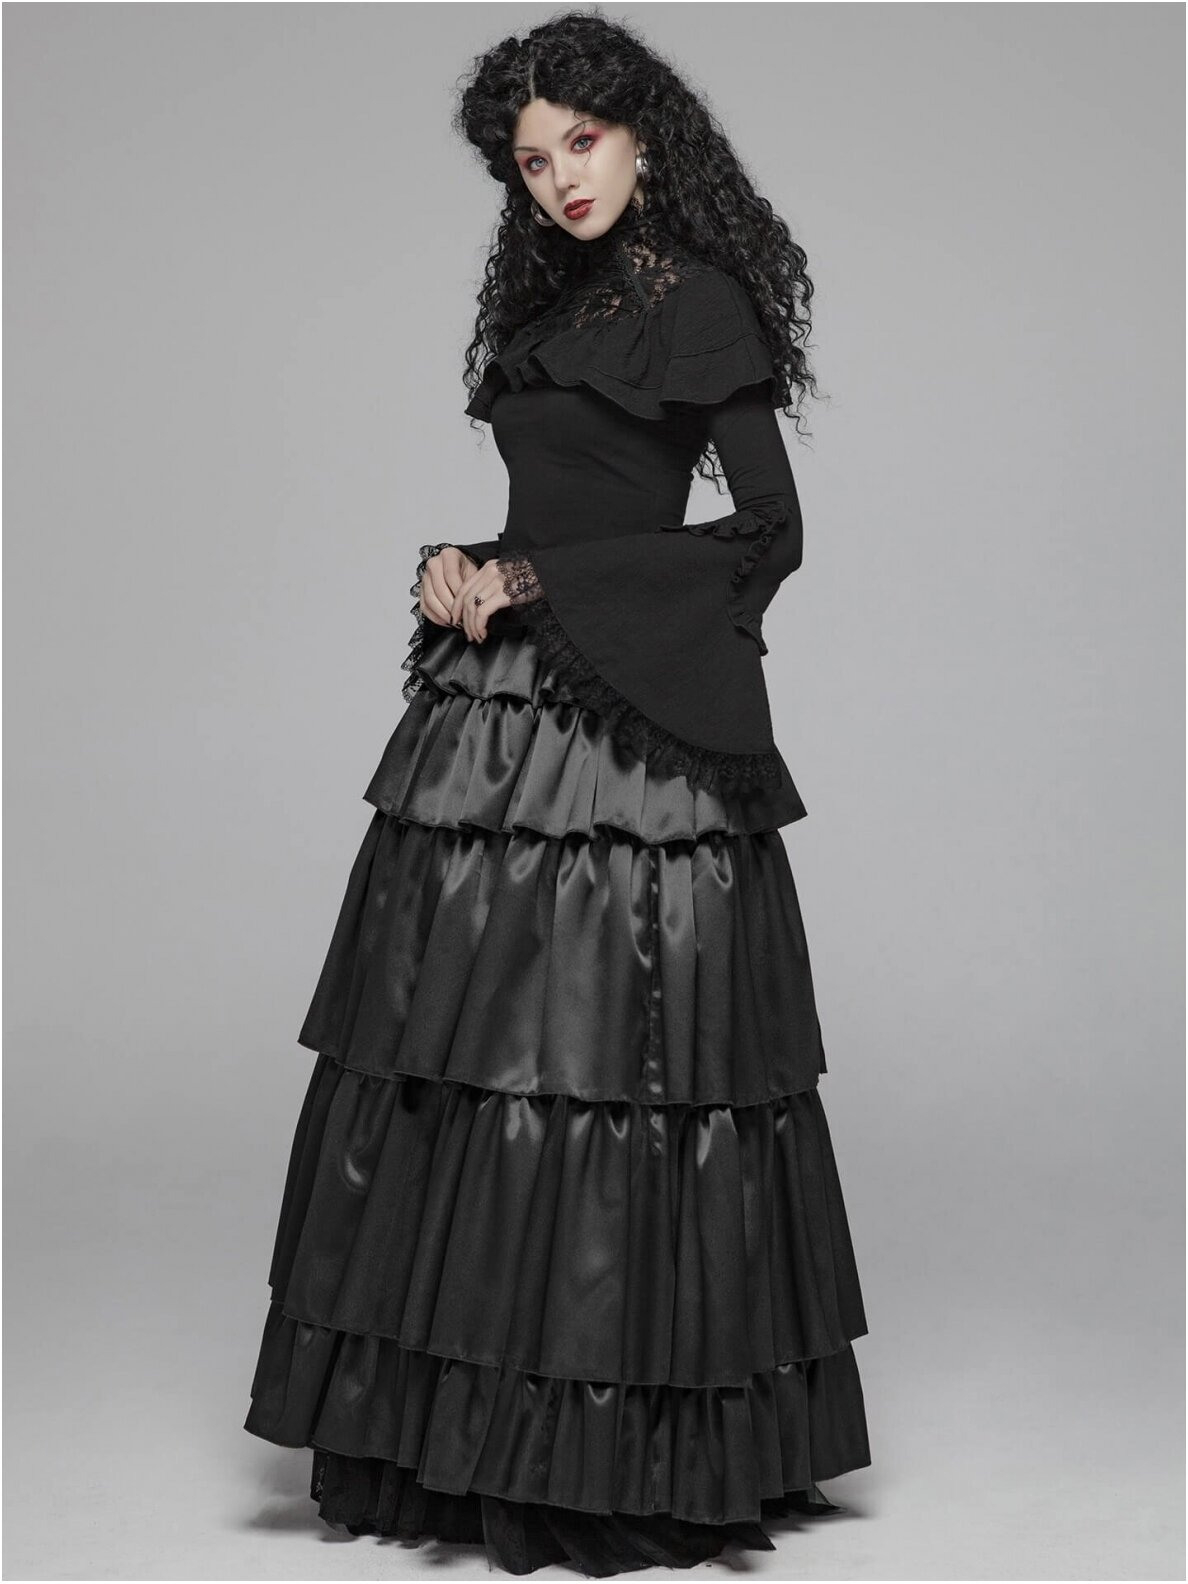 Röcke  Lang  Gothickleidung  Damen  Gothic Kleidung